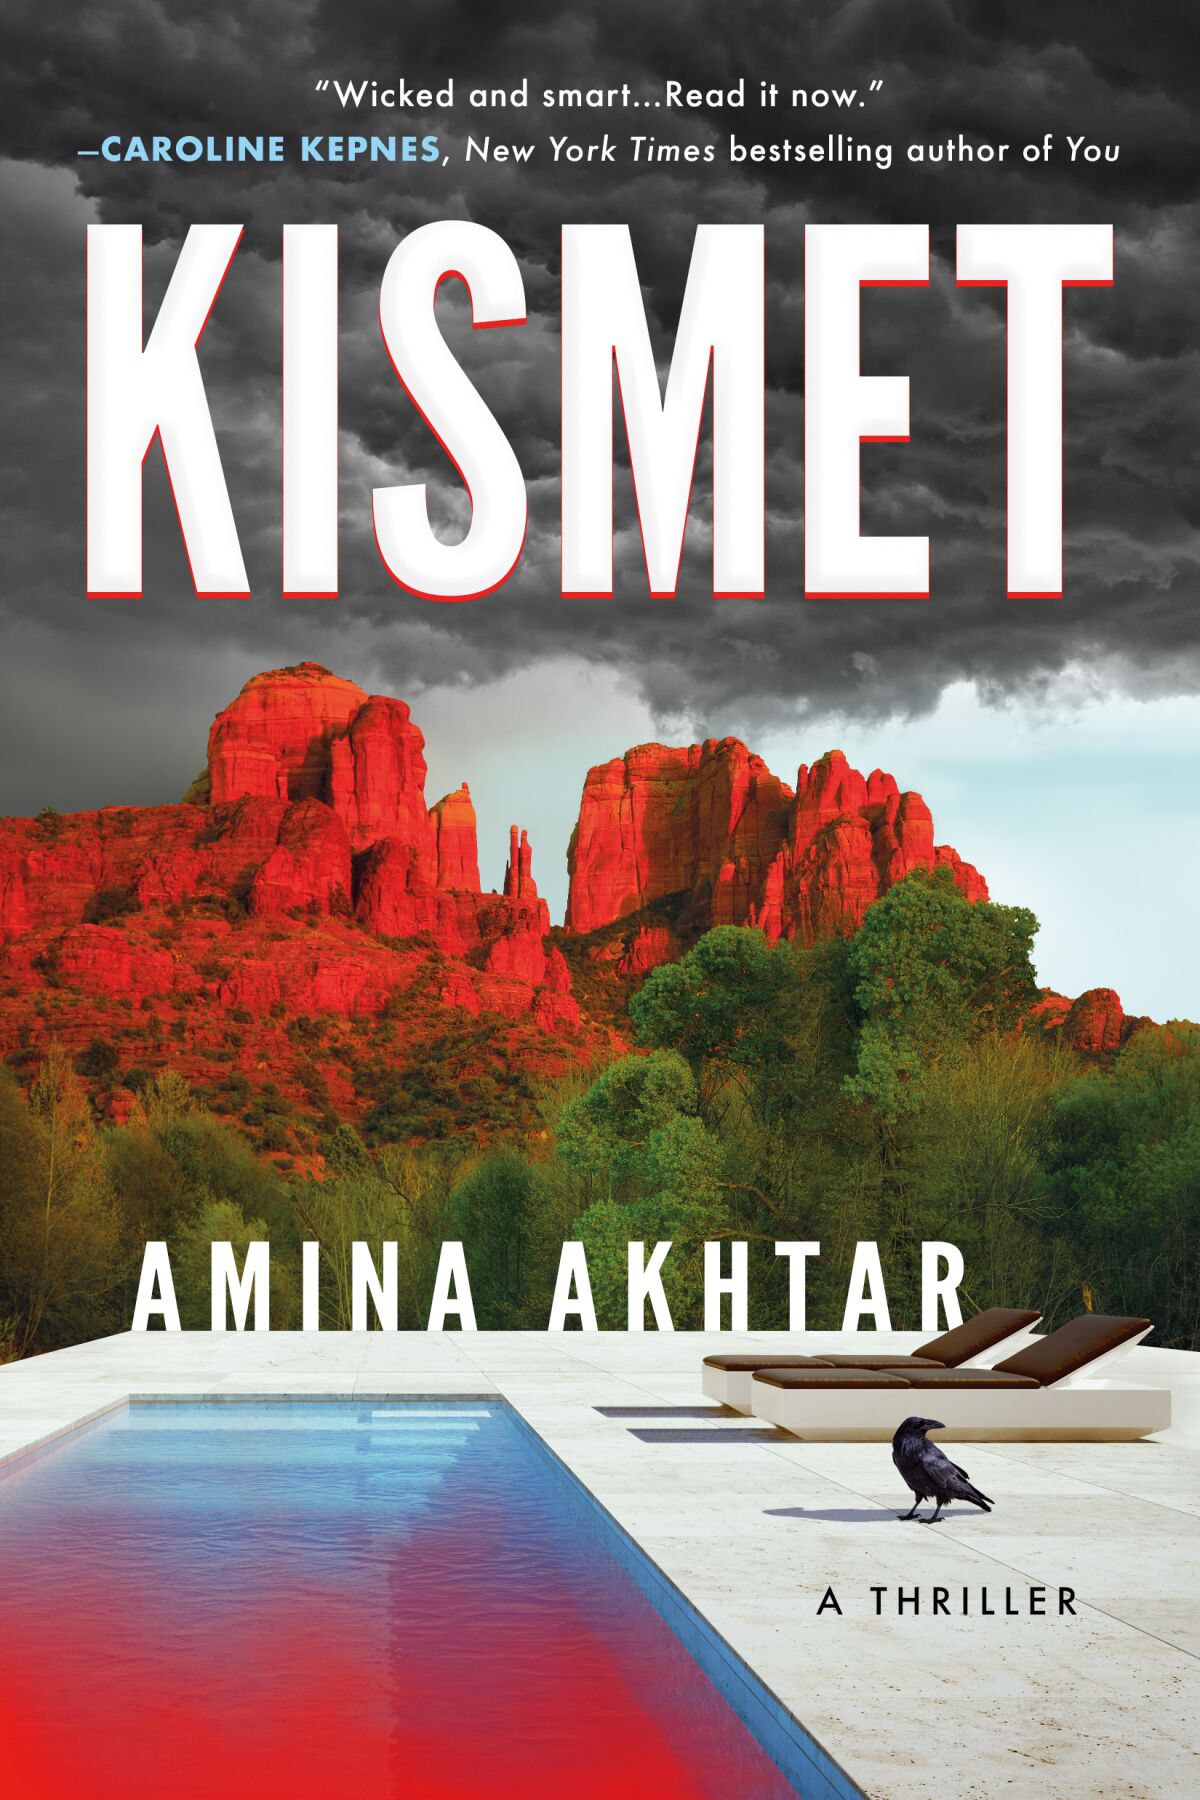 "Kismet," by Amina Akhtar